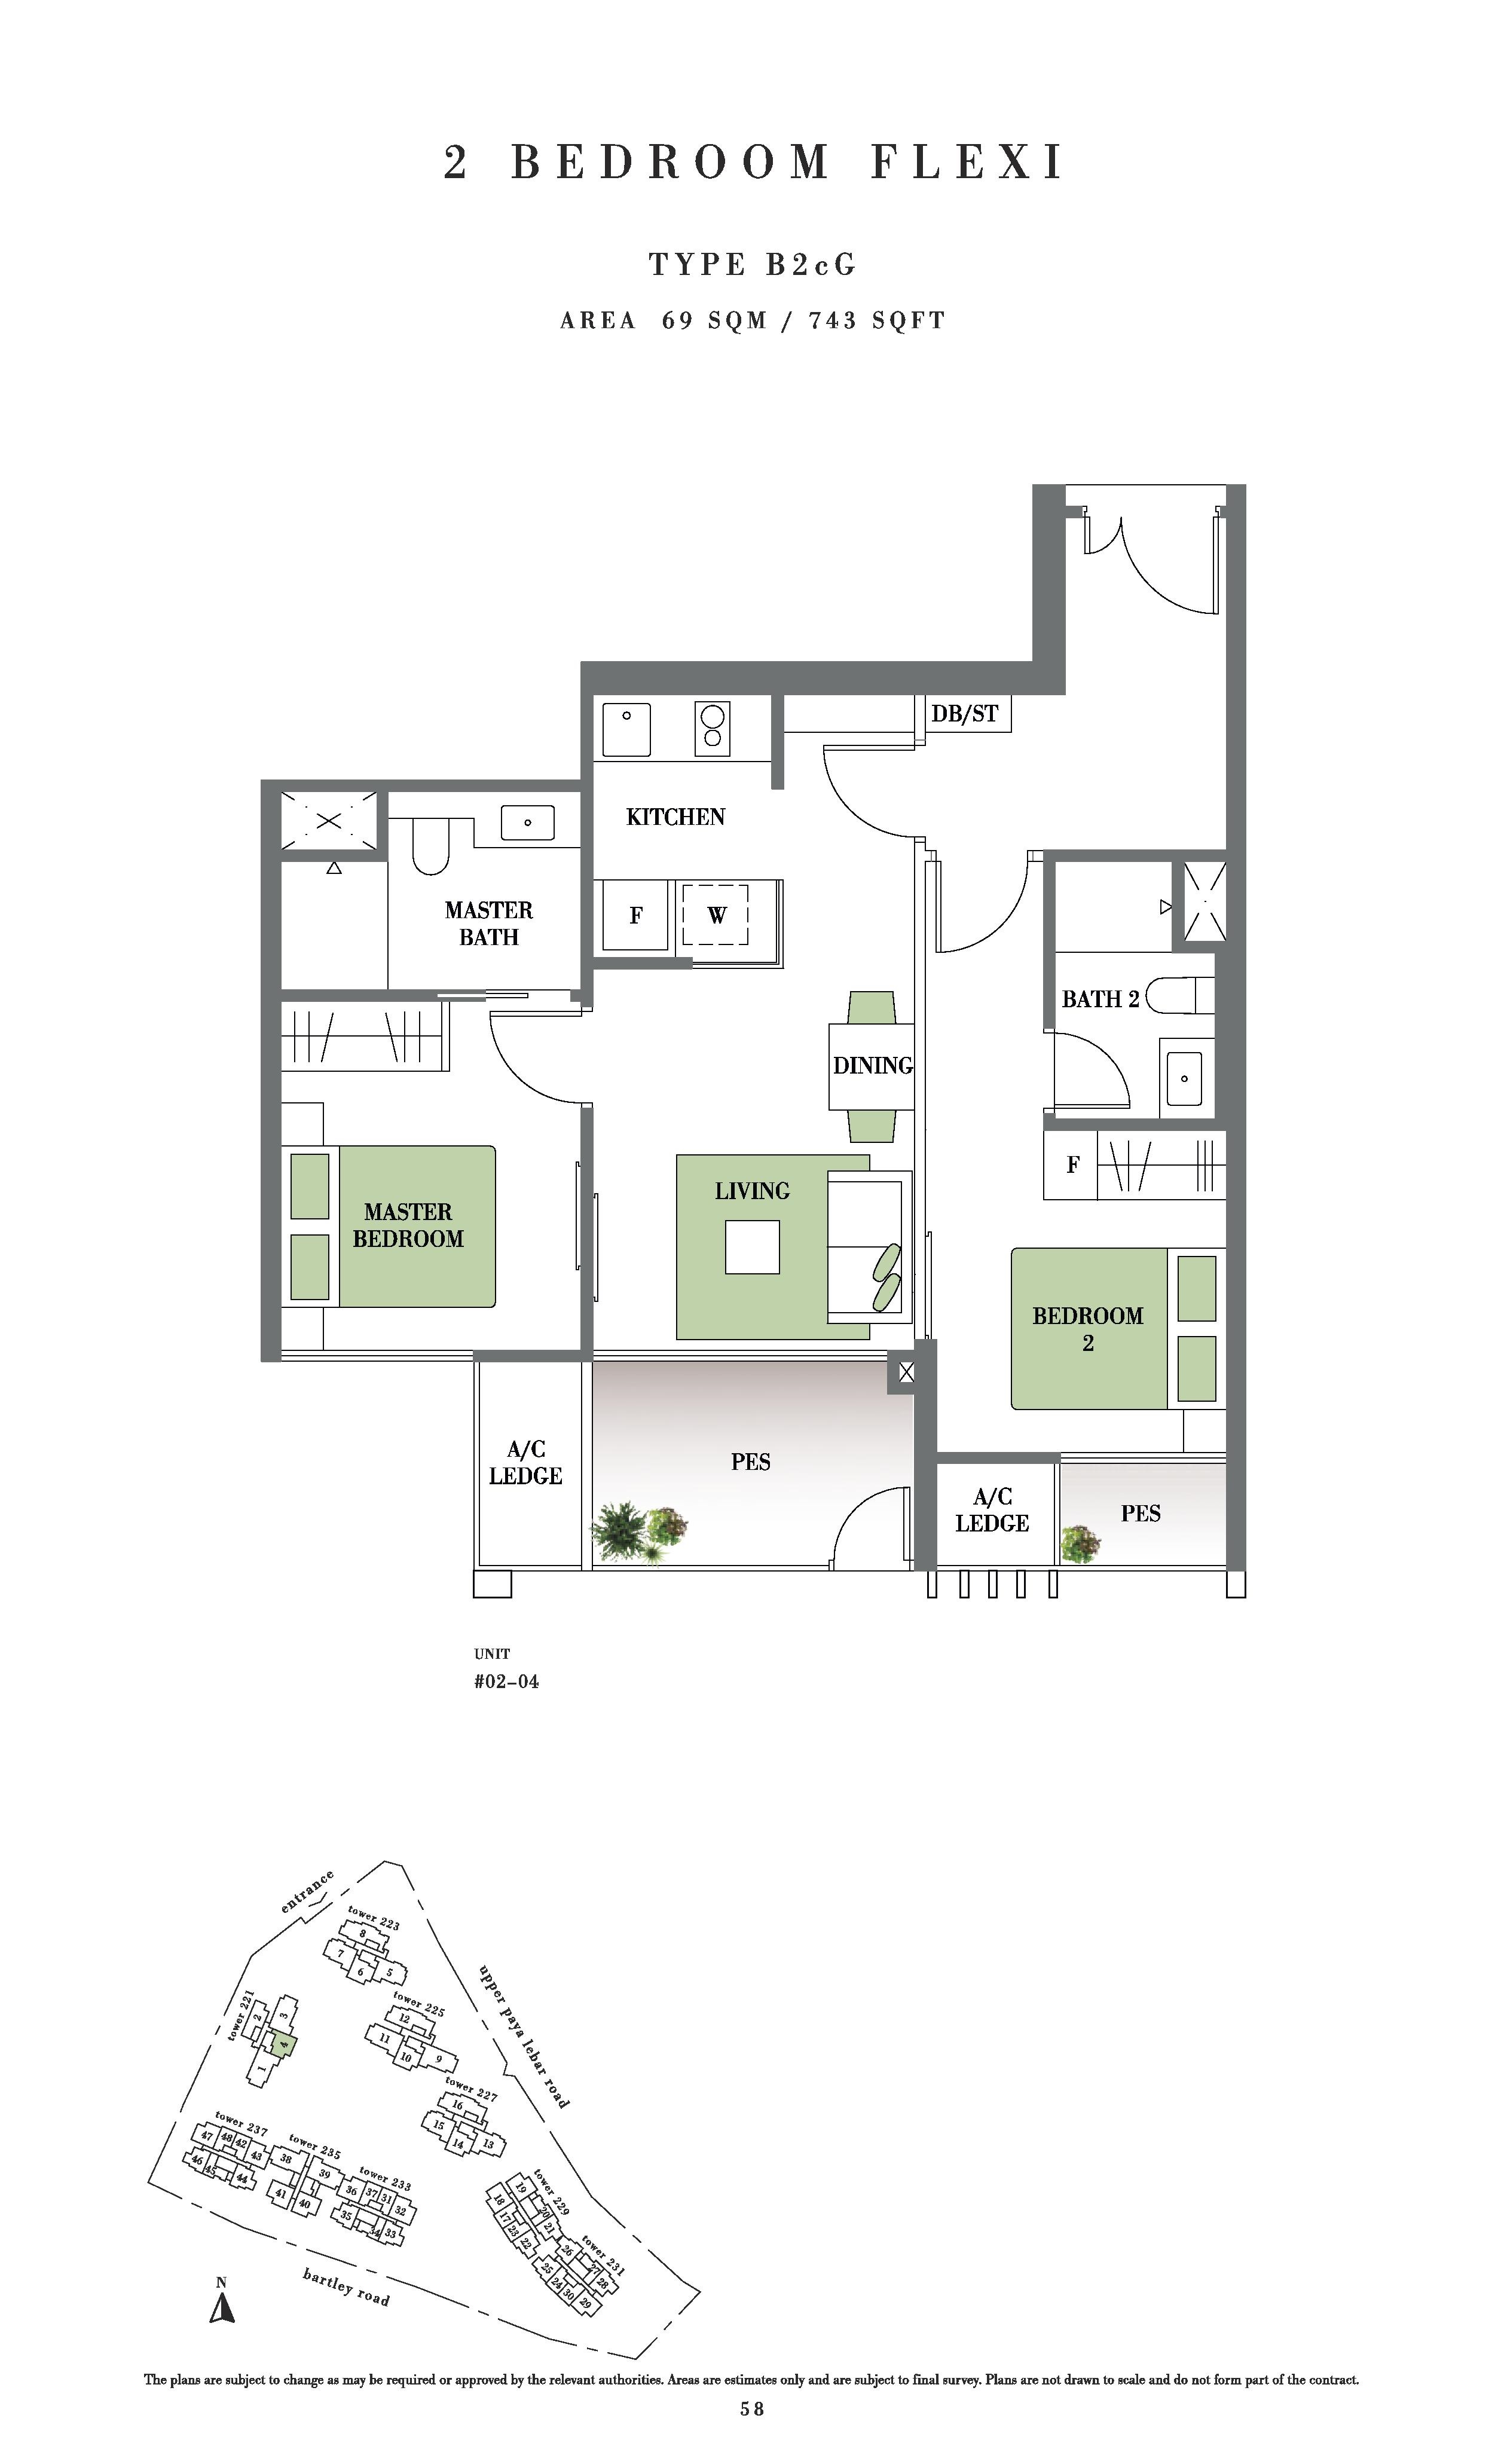 Botanique @ Bartley 2 Bedroom Flexi PES Floor Plans Type B2cG